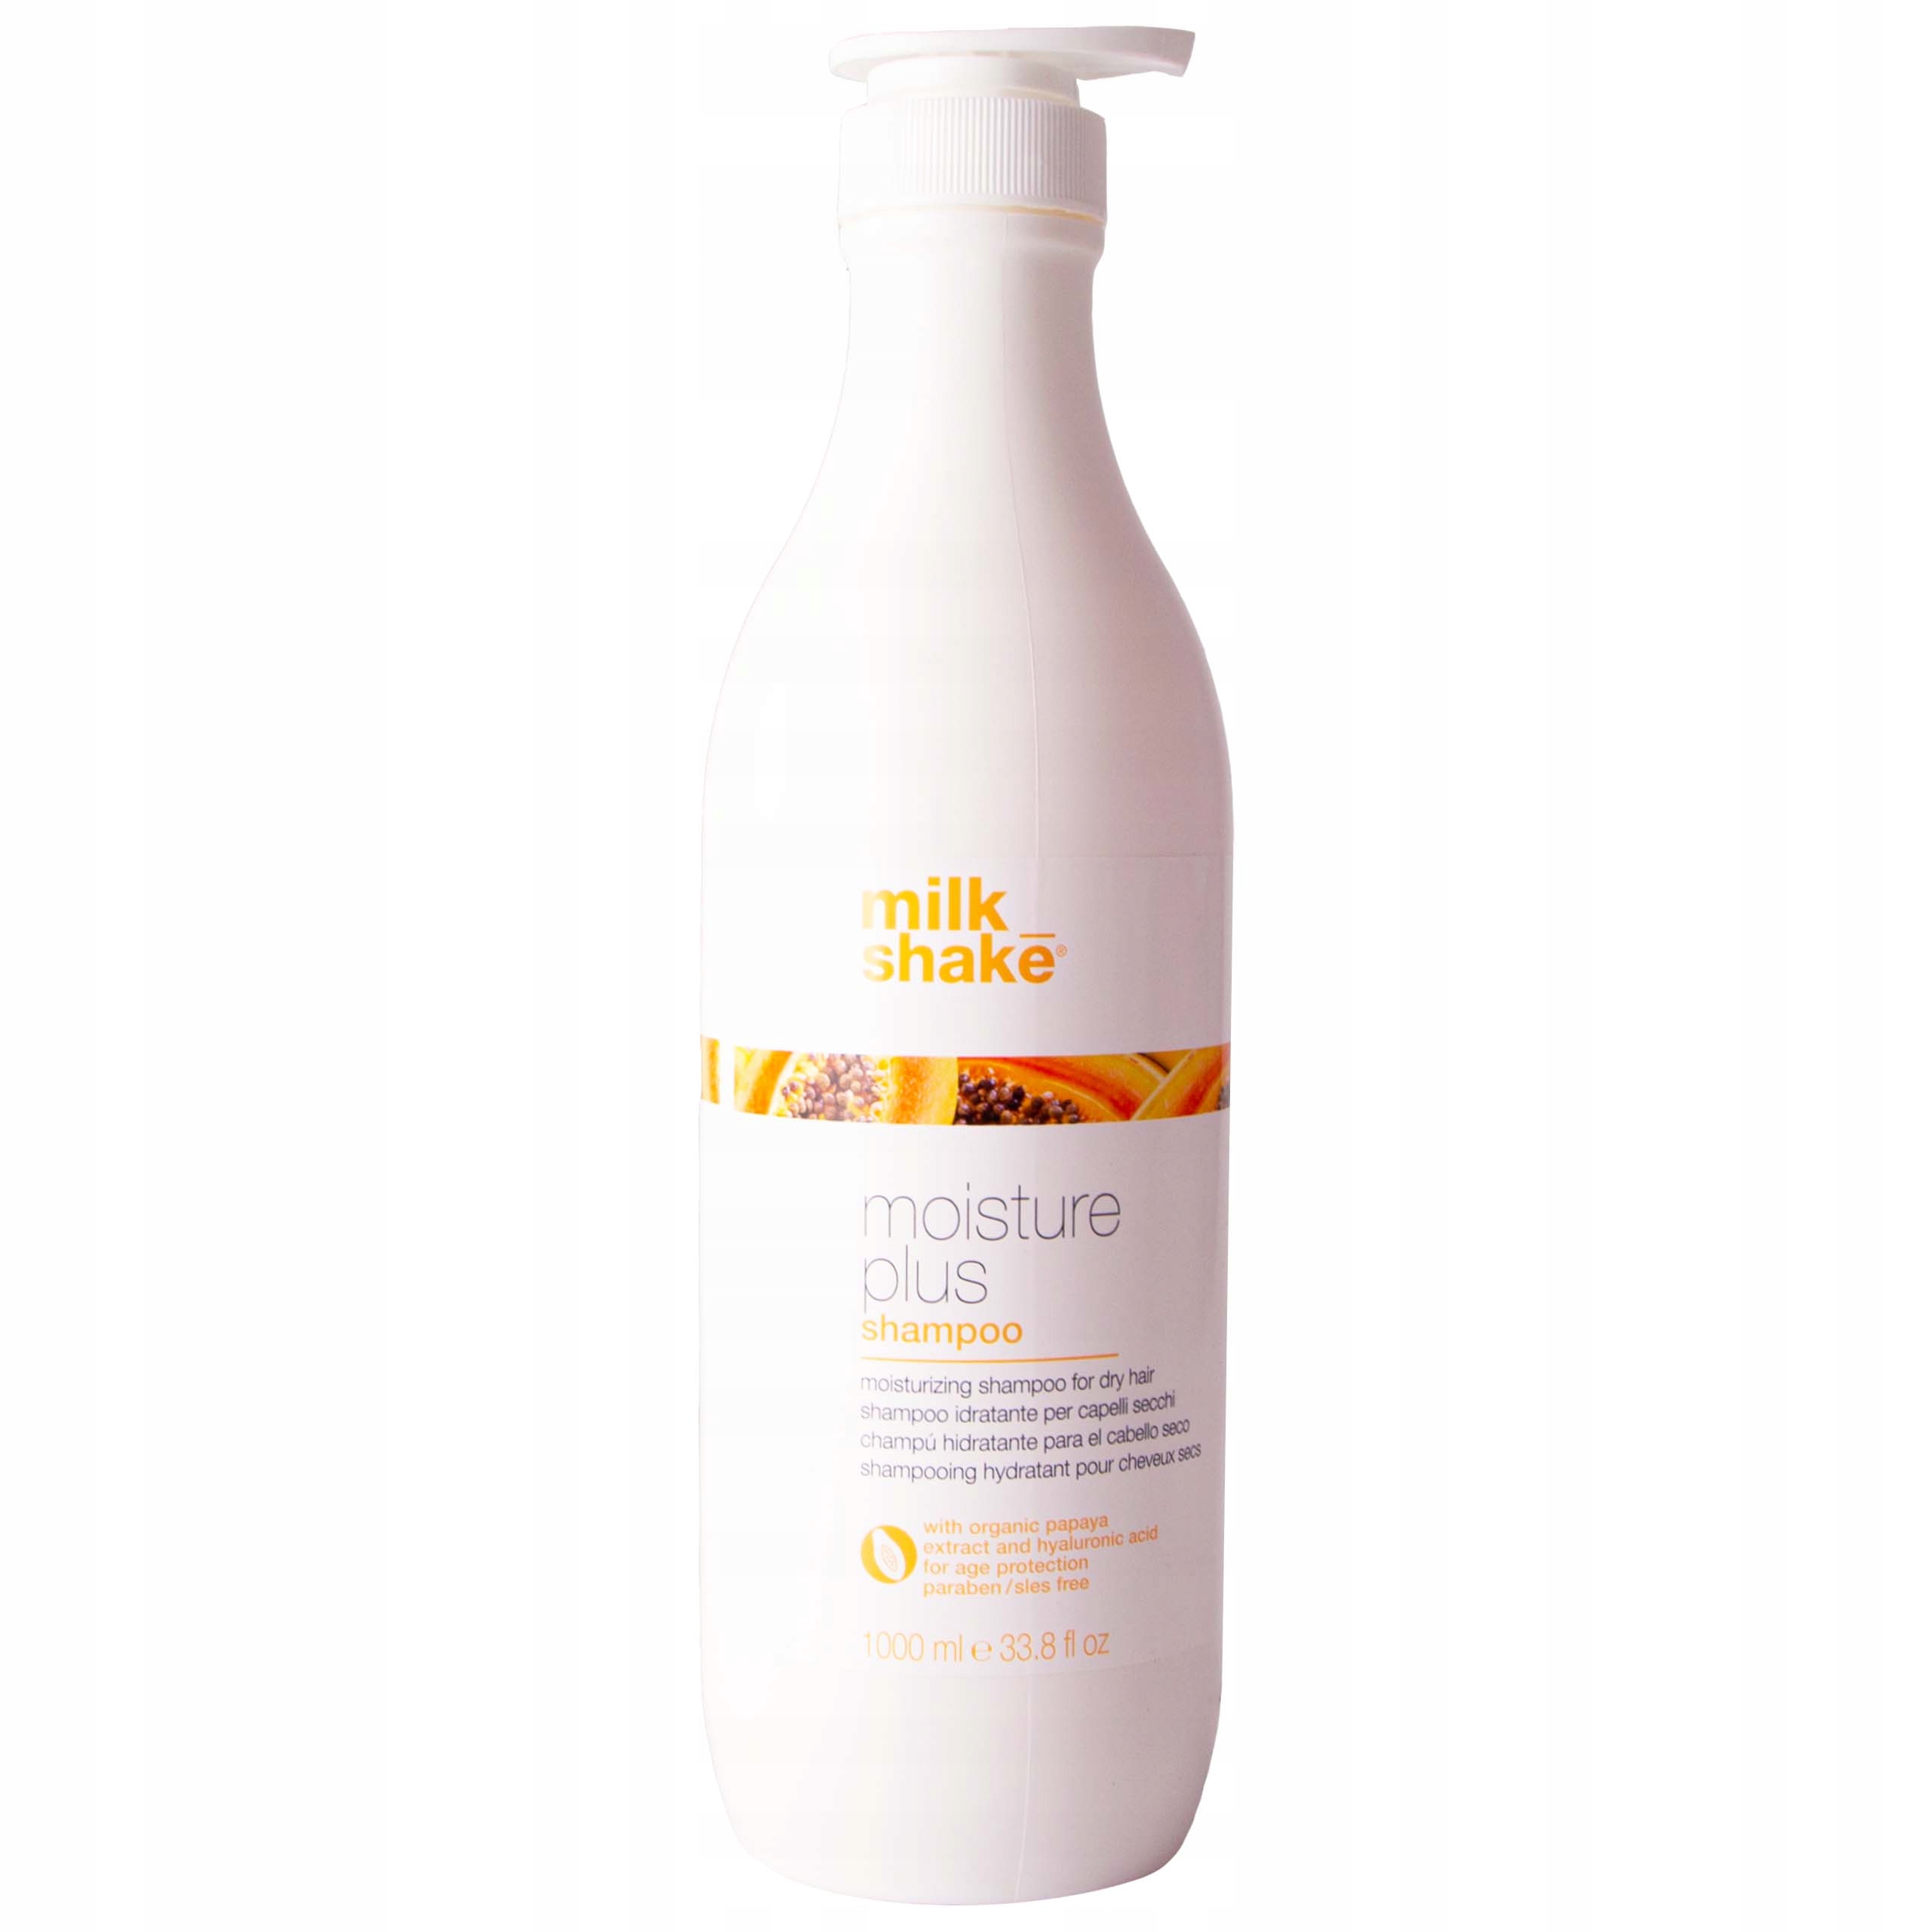 milk shake szampon 1000ml